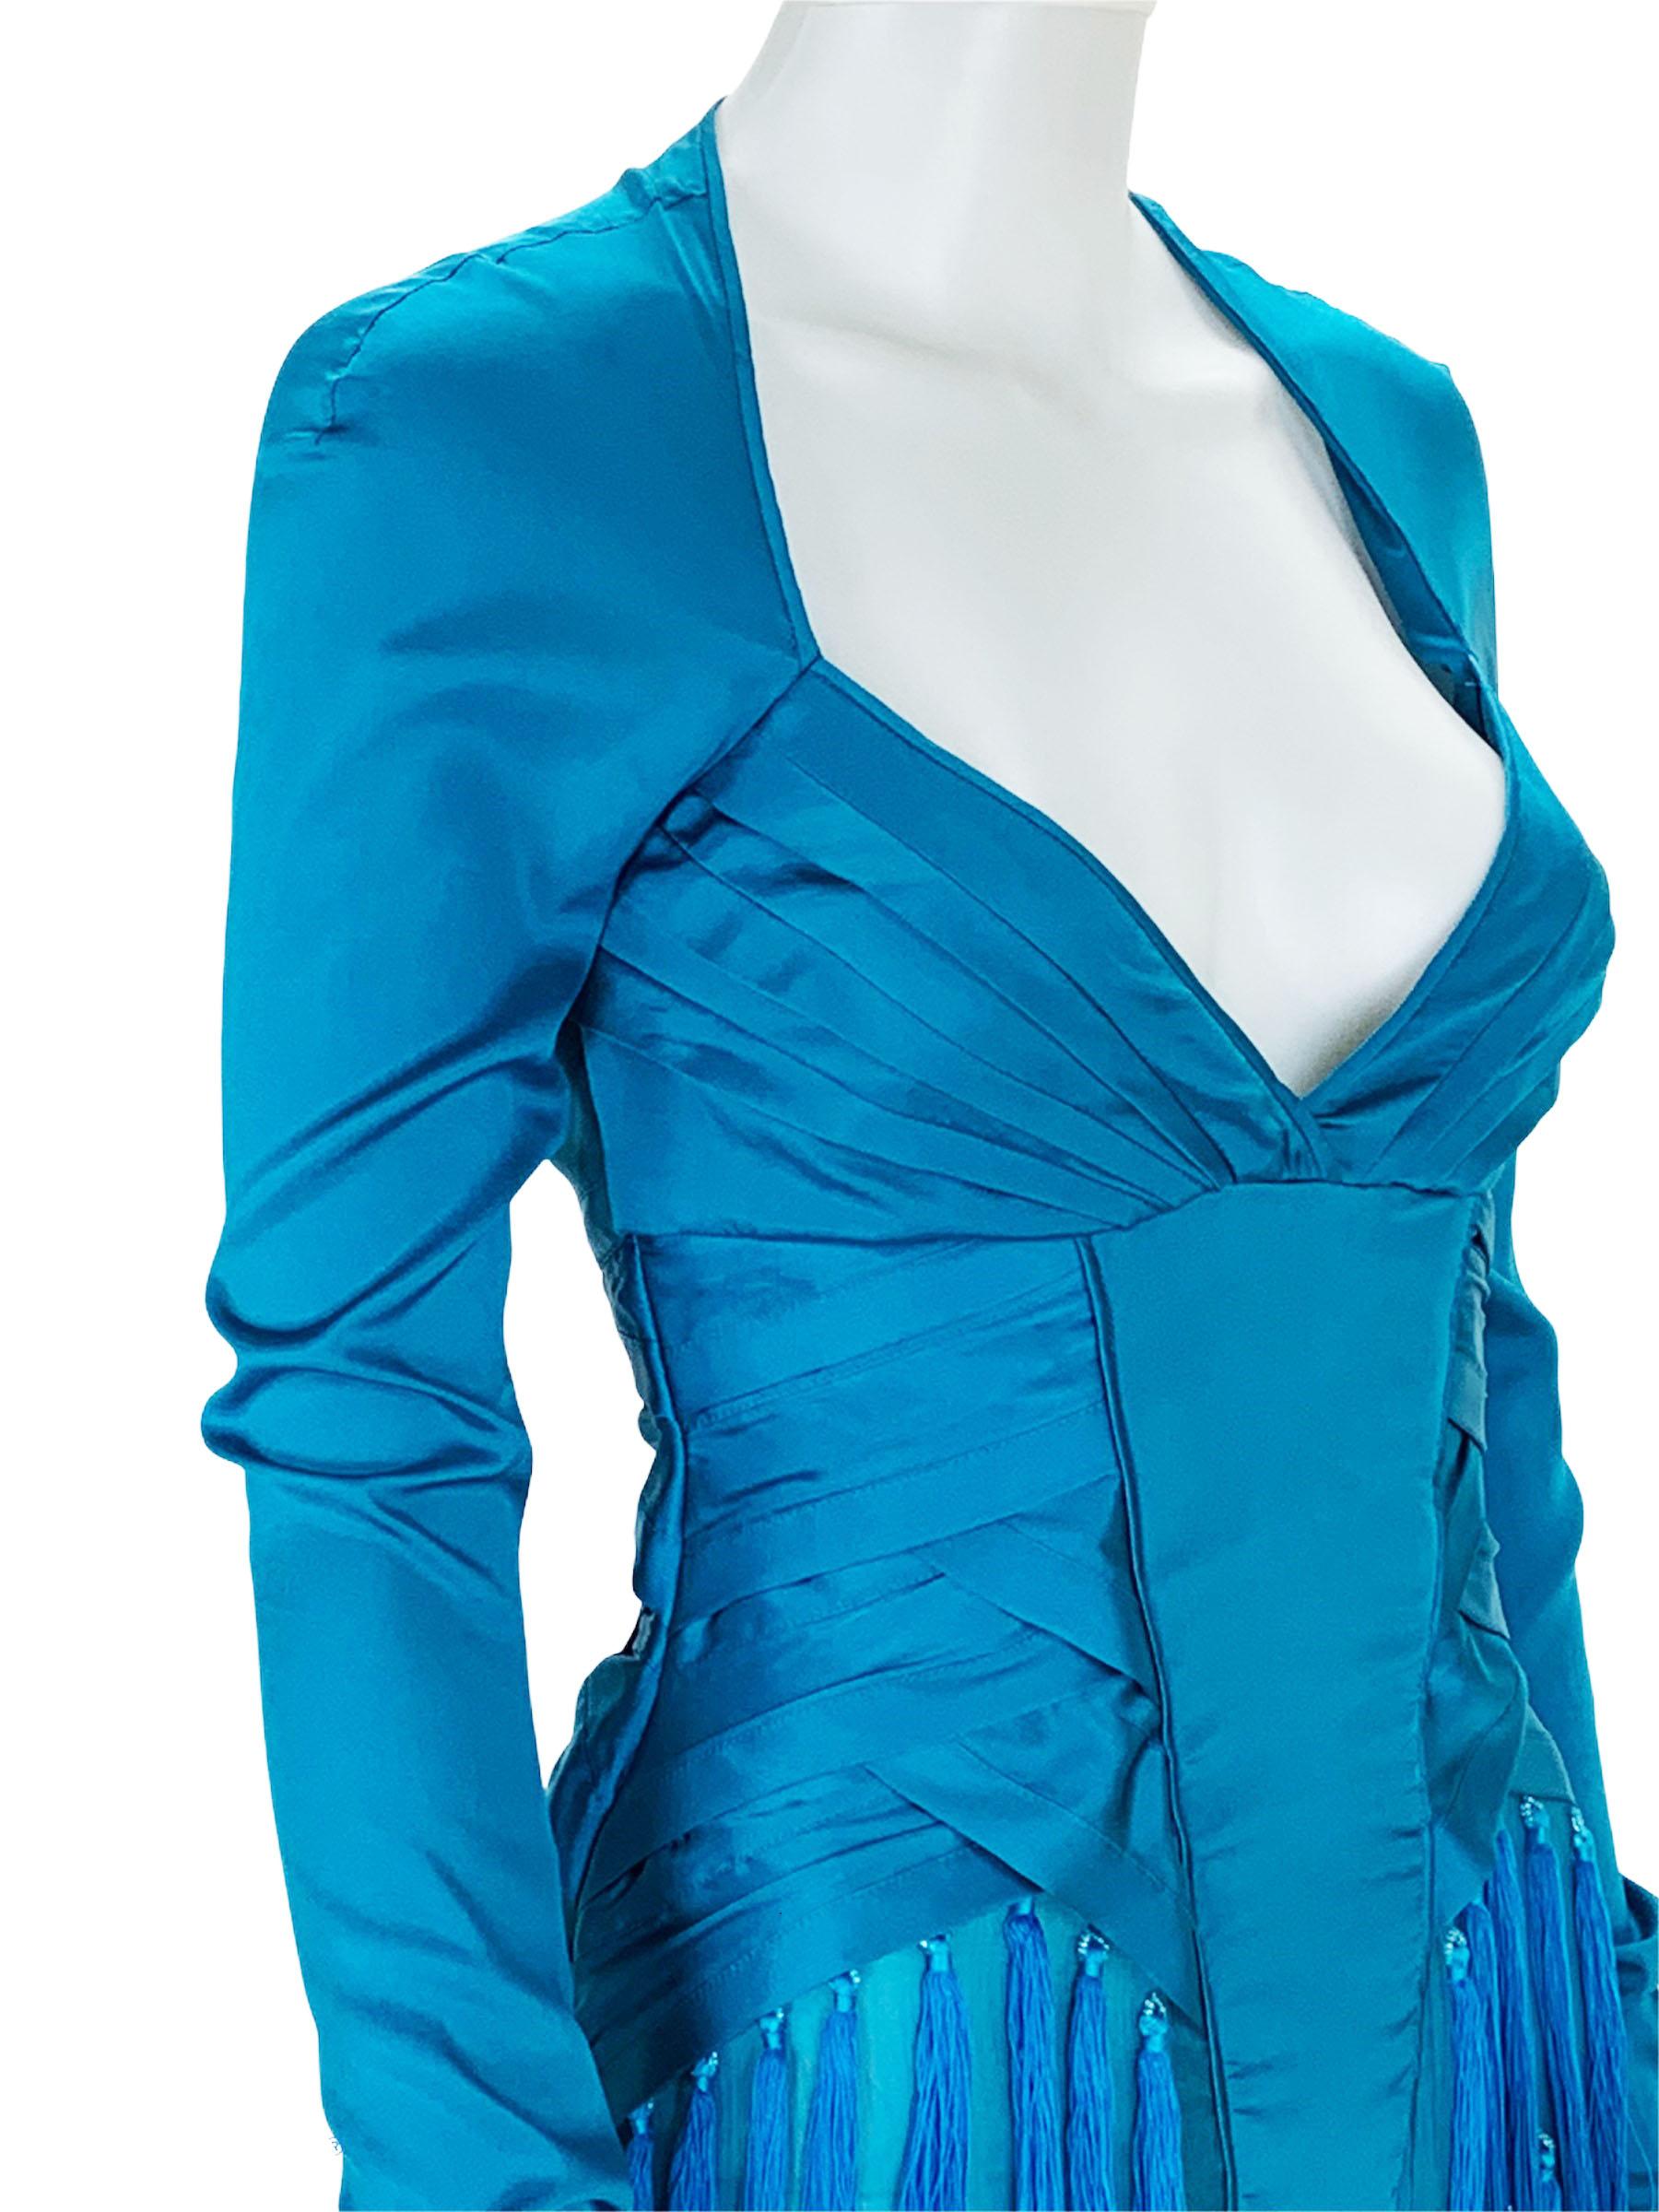 Women's New Tom Ford for Gucci F/W 2004 Runway Caribbean Blue Fringe Dress Italian 38 For Sale